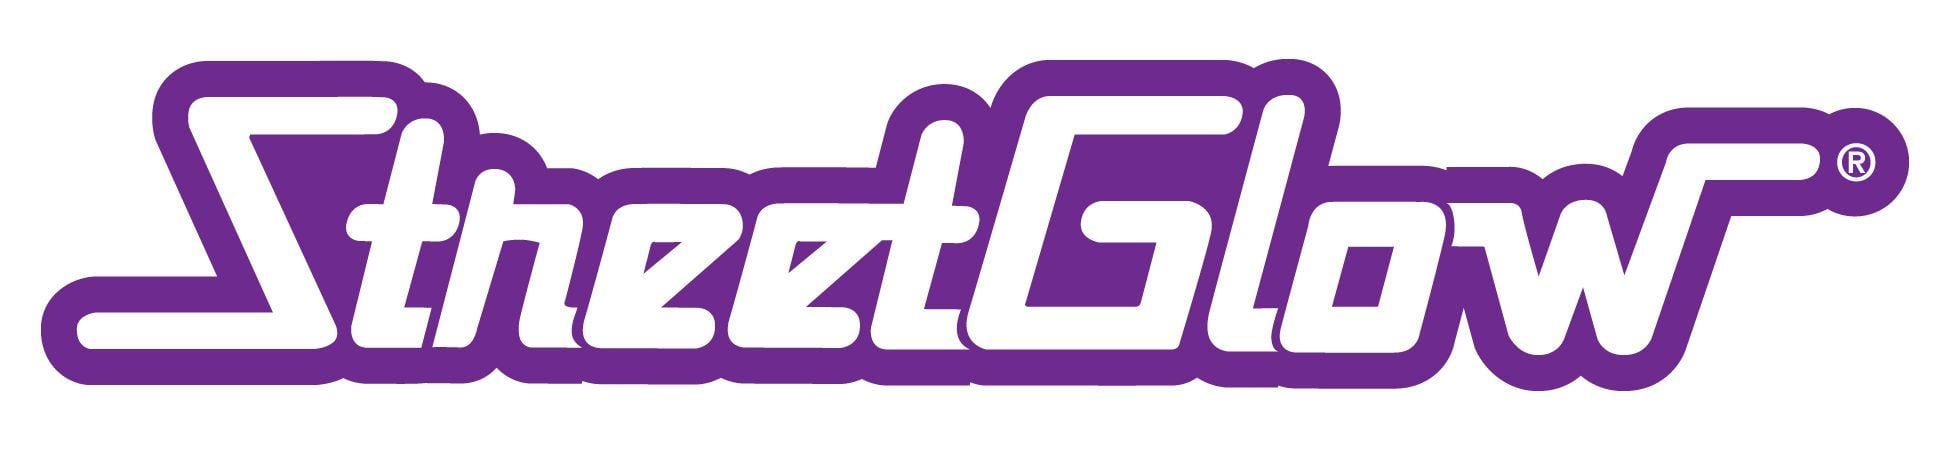 StreetGlow Logo - Glow Logos